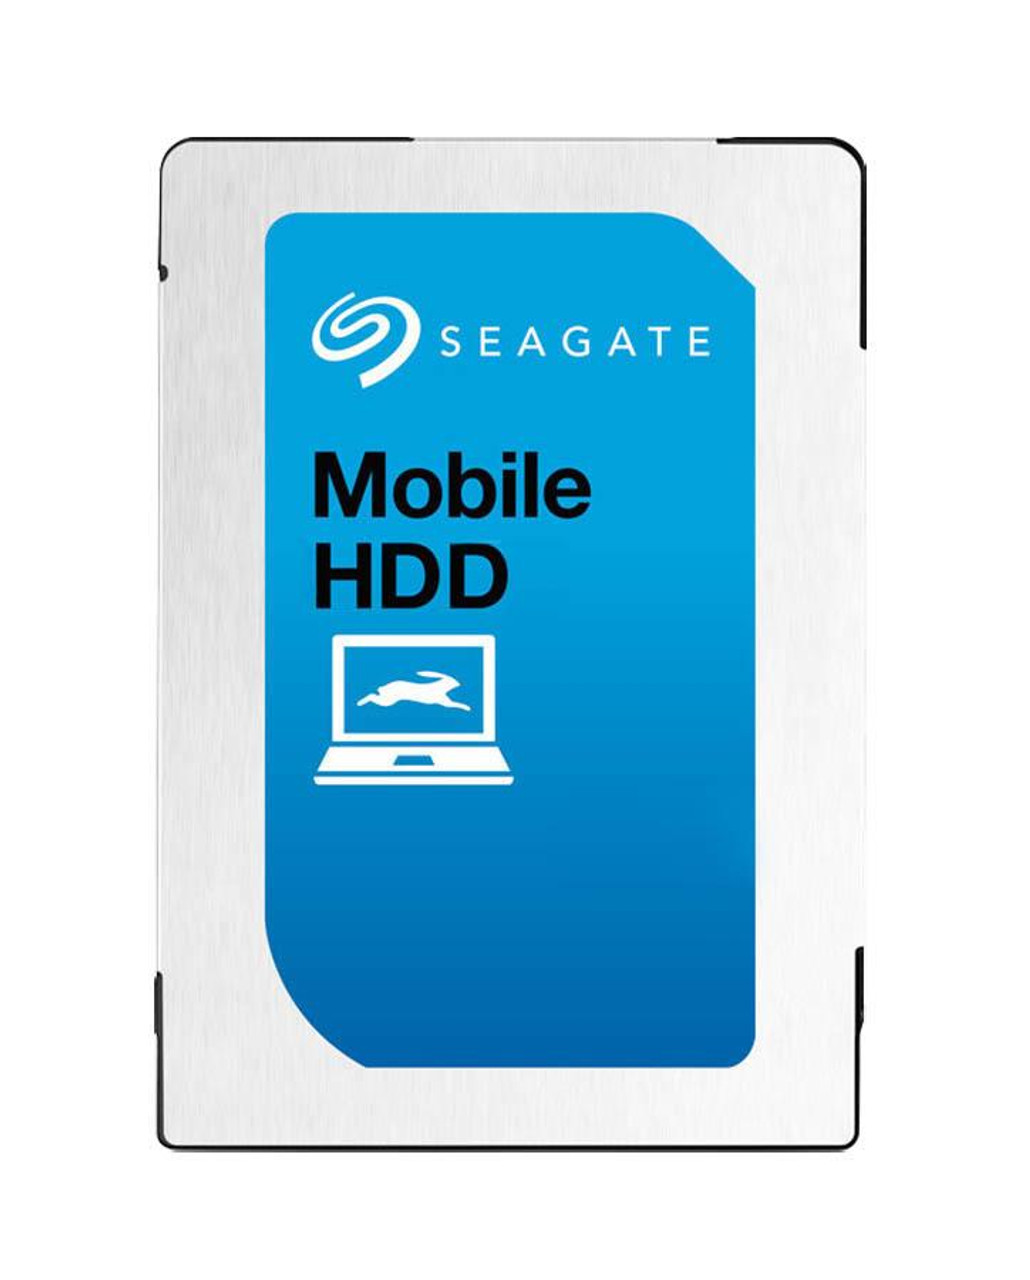 1RK172-189 Seagate Mobile HDD 1TB 5400RPM SATA 6Gbps 128MB Cache 2.5-inch Internal Hard Drive